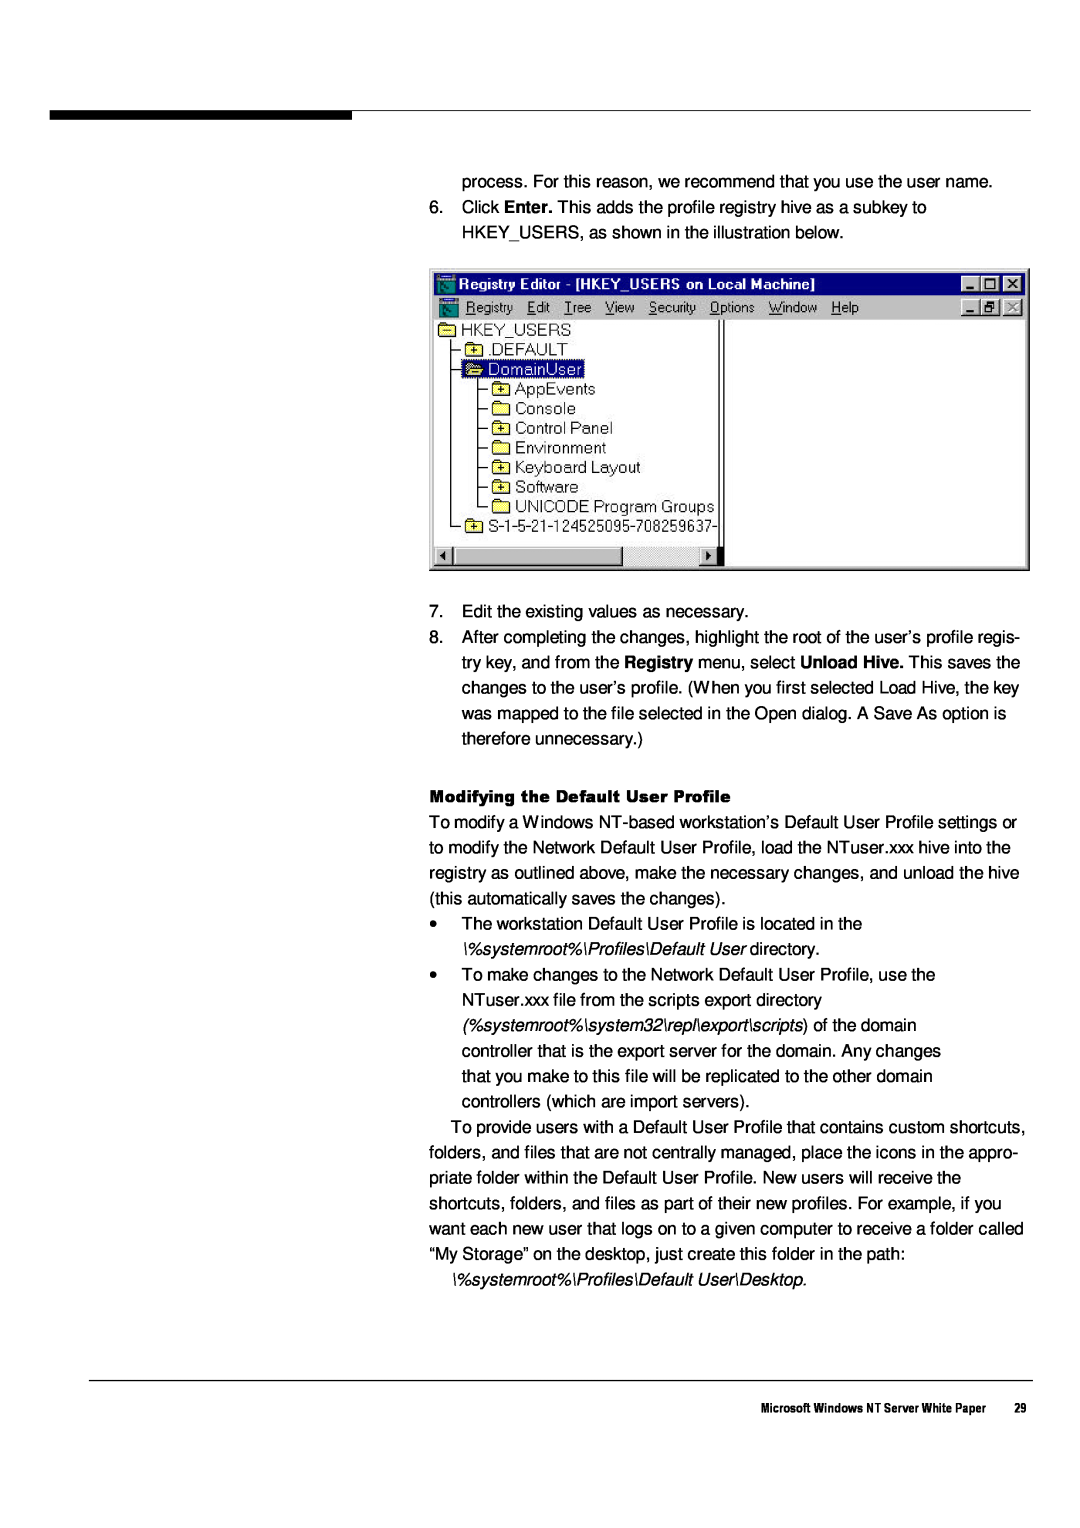 Microsoft Windows NT 4.0 manual systemroot%\Profiles\Default User\Desktop 